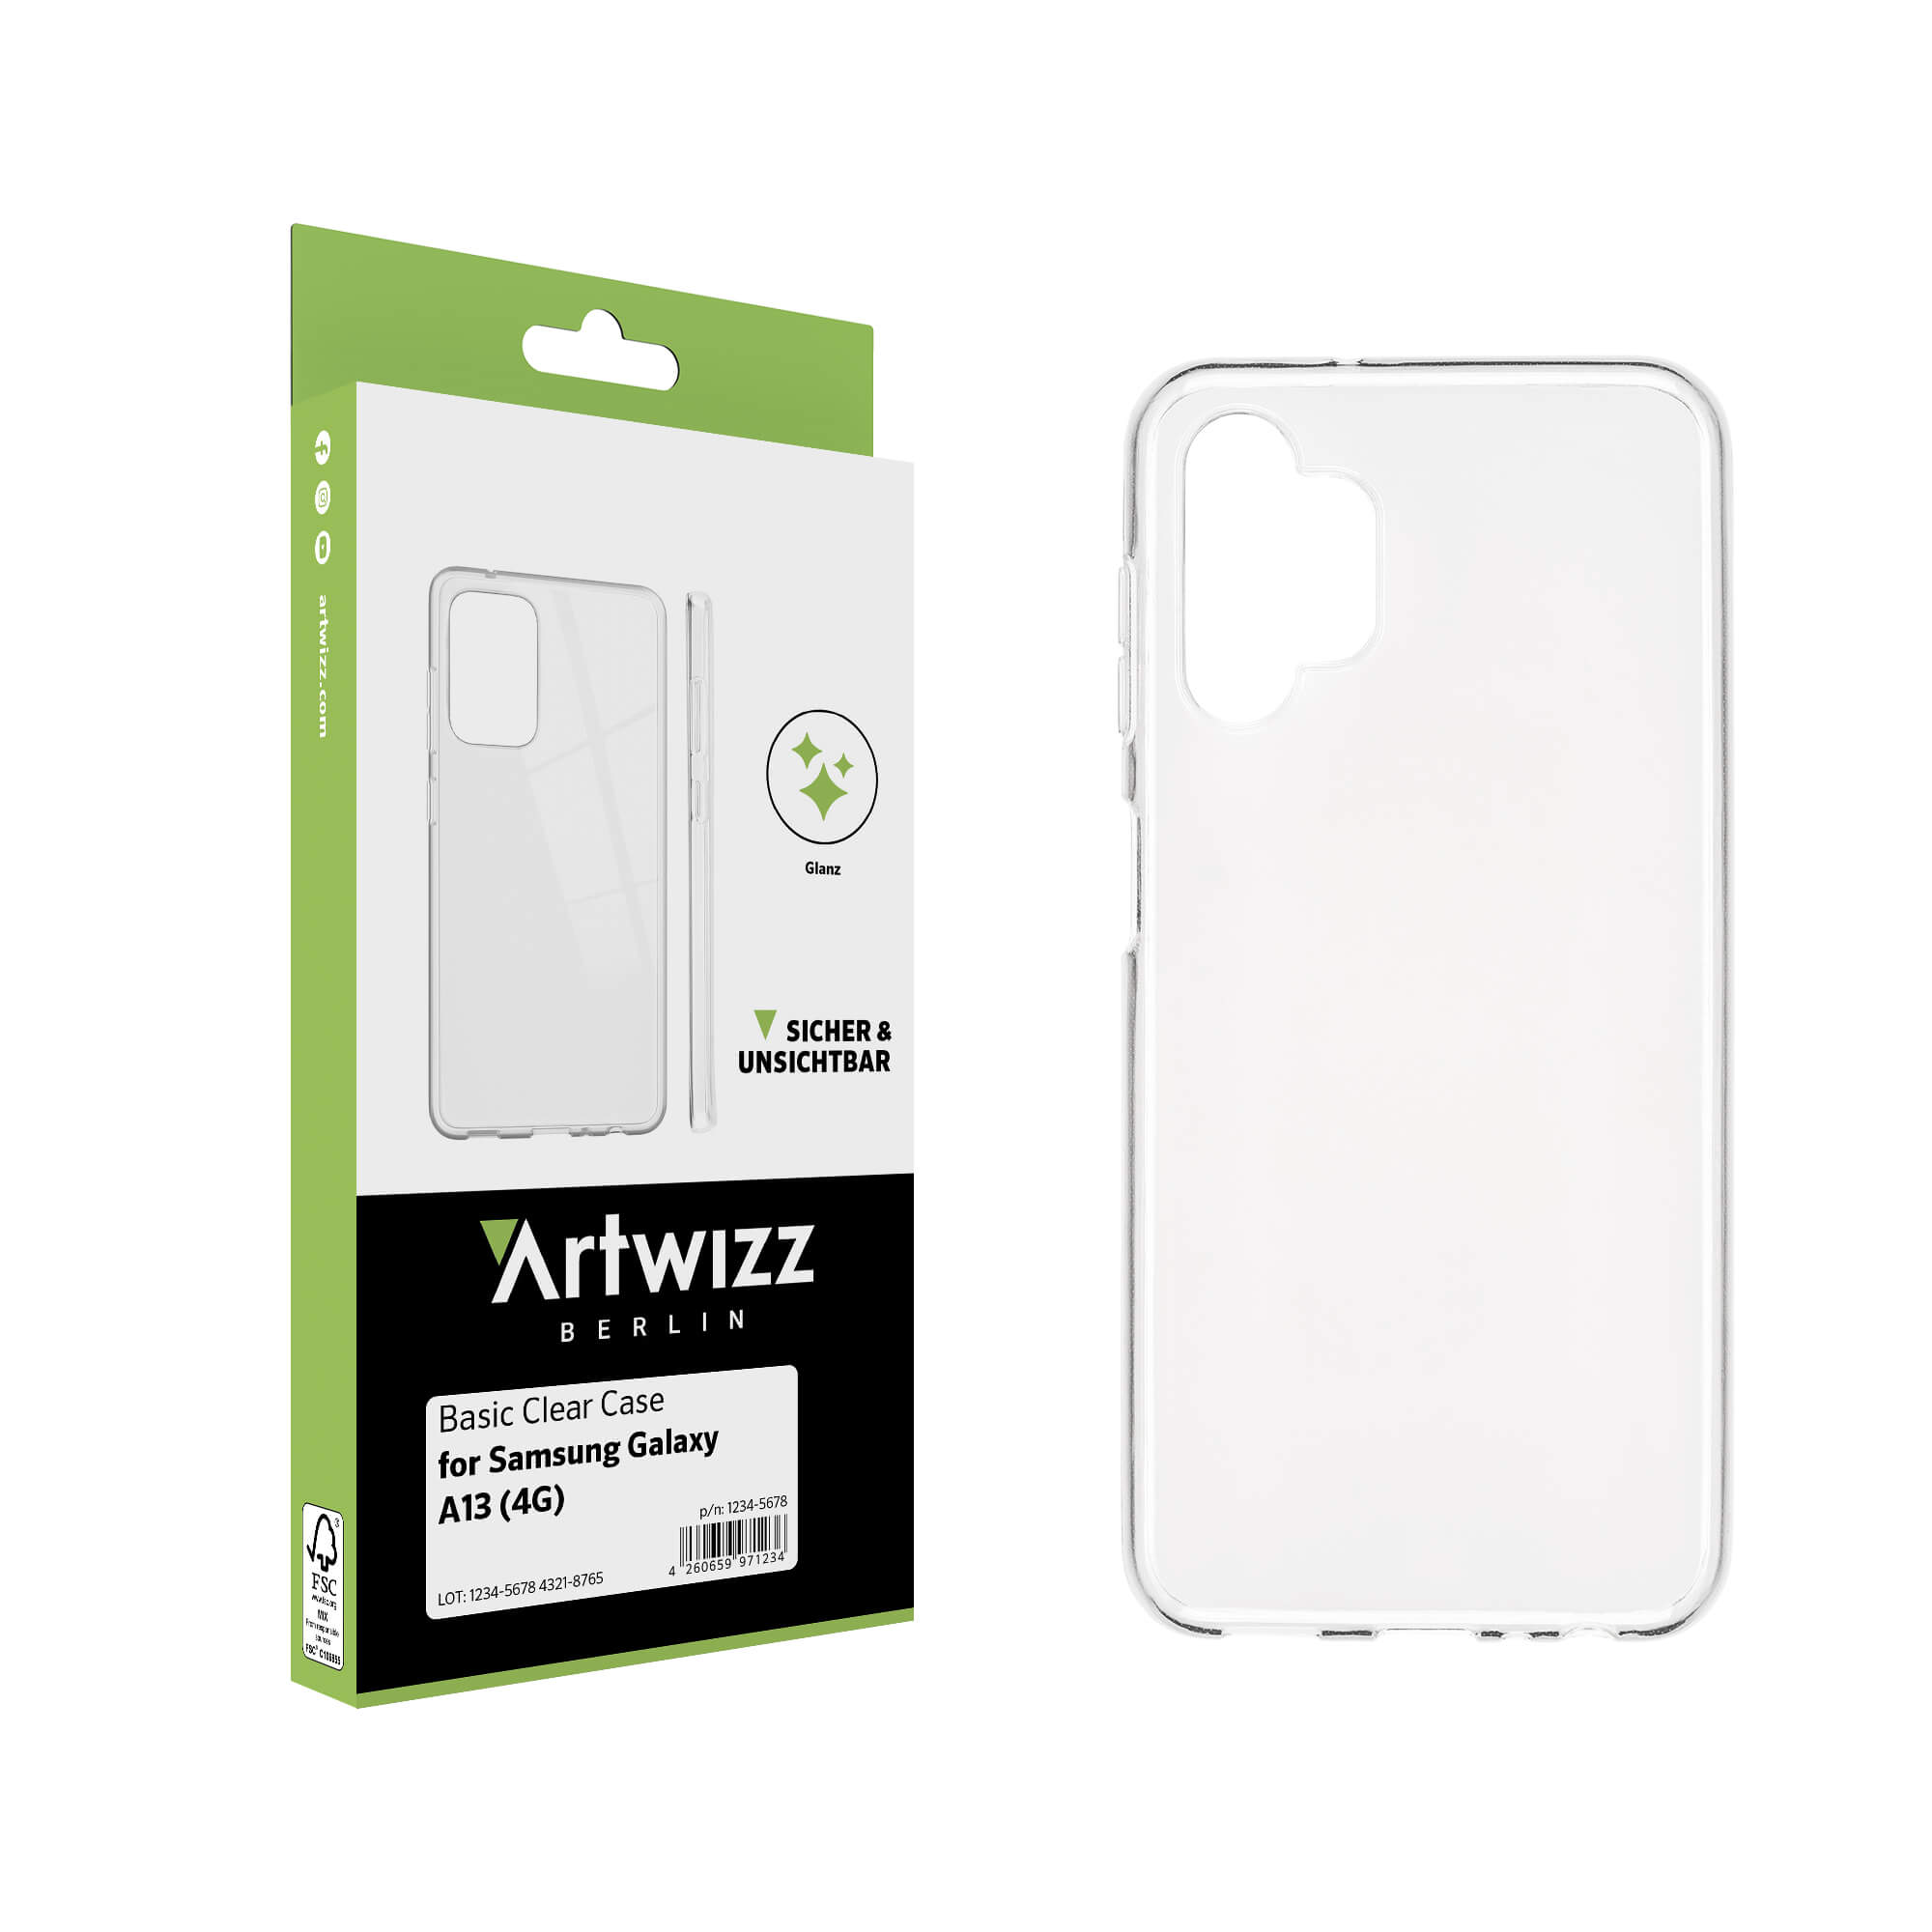 ARTWIZZ Basic Clear Transparent A13 Samsung, Case, Galaxy Backcover, (4G)